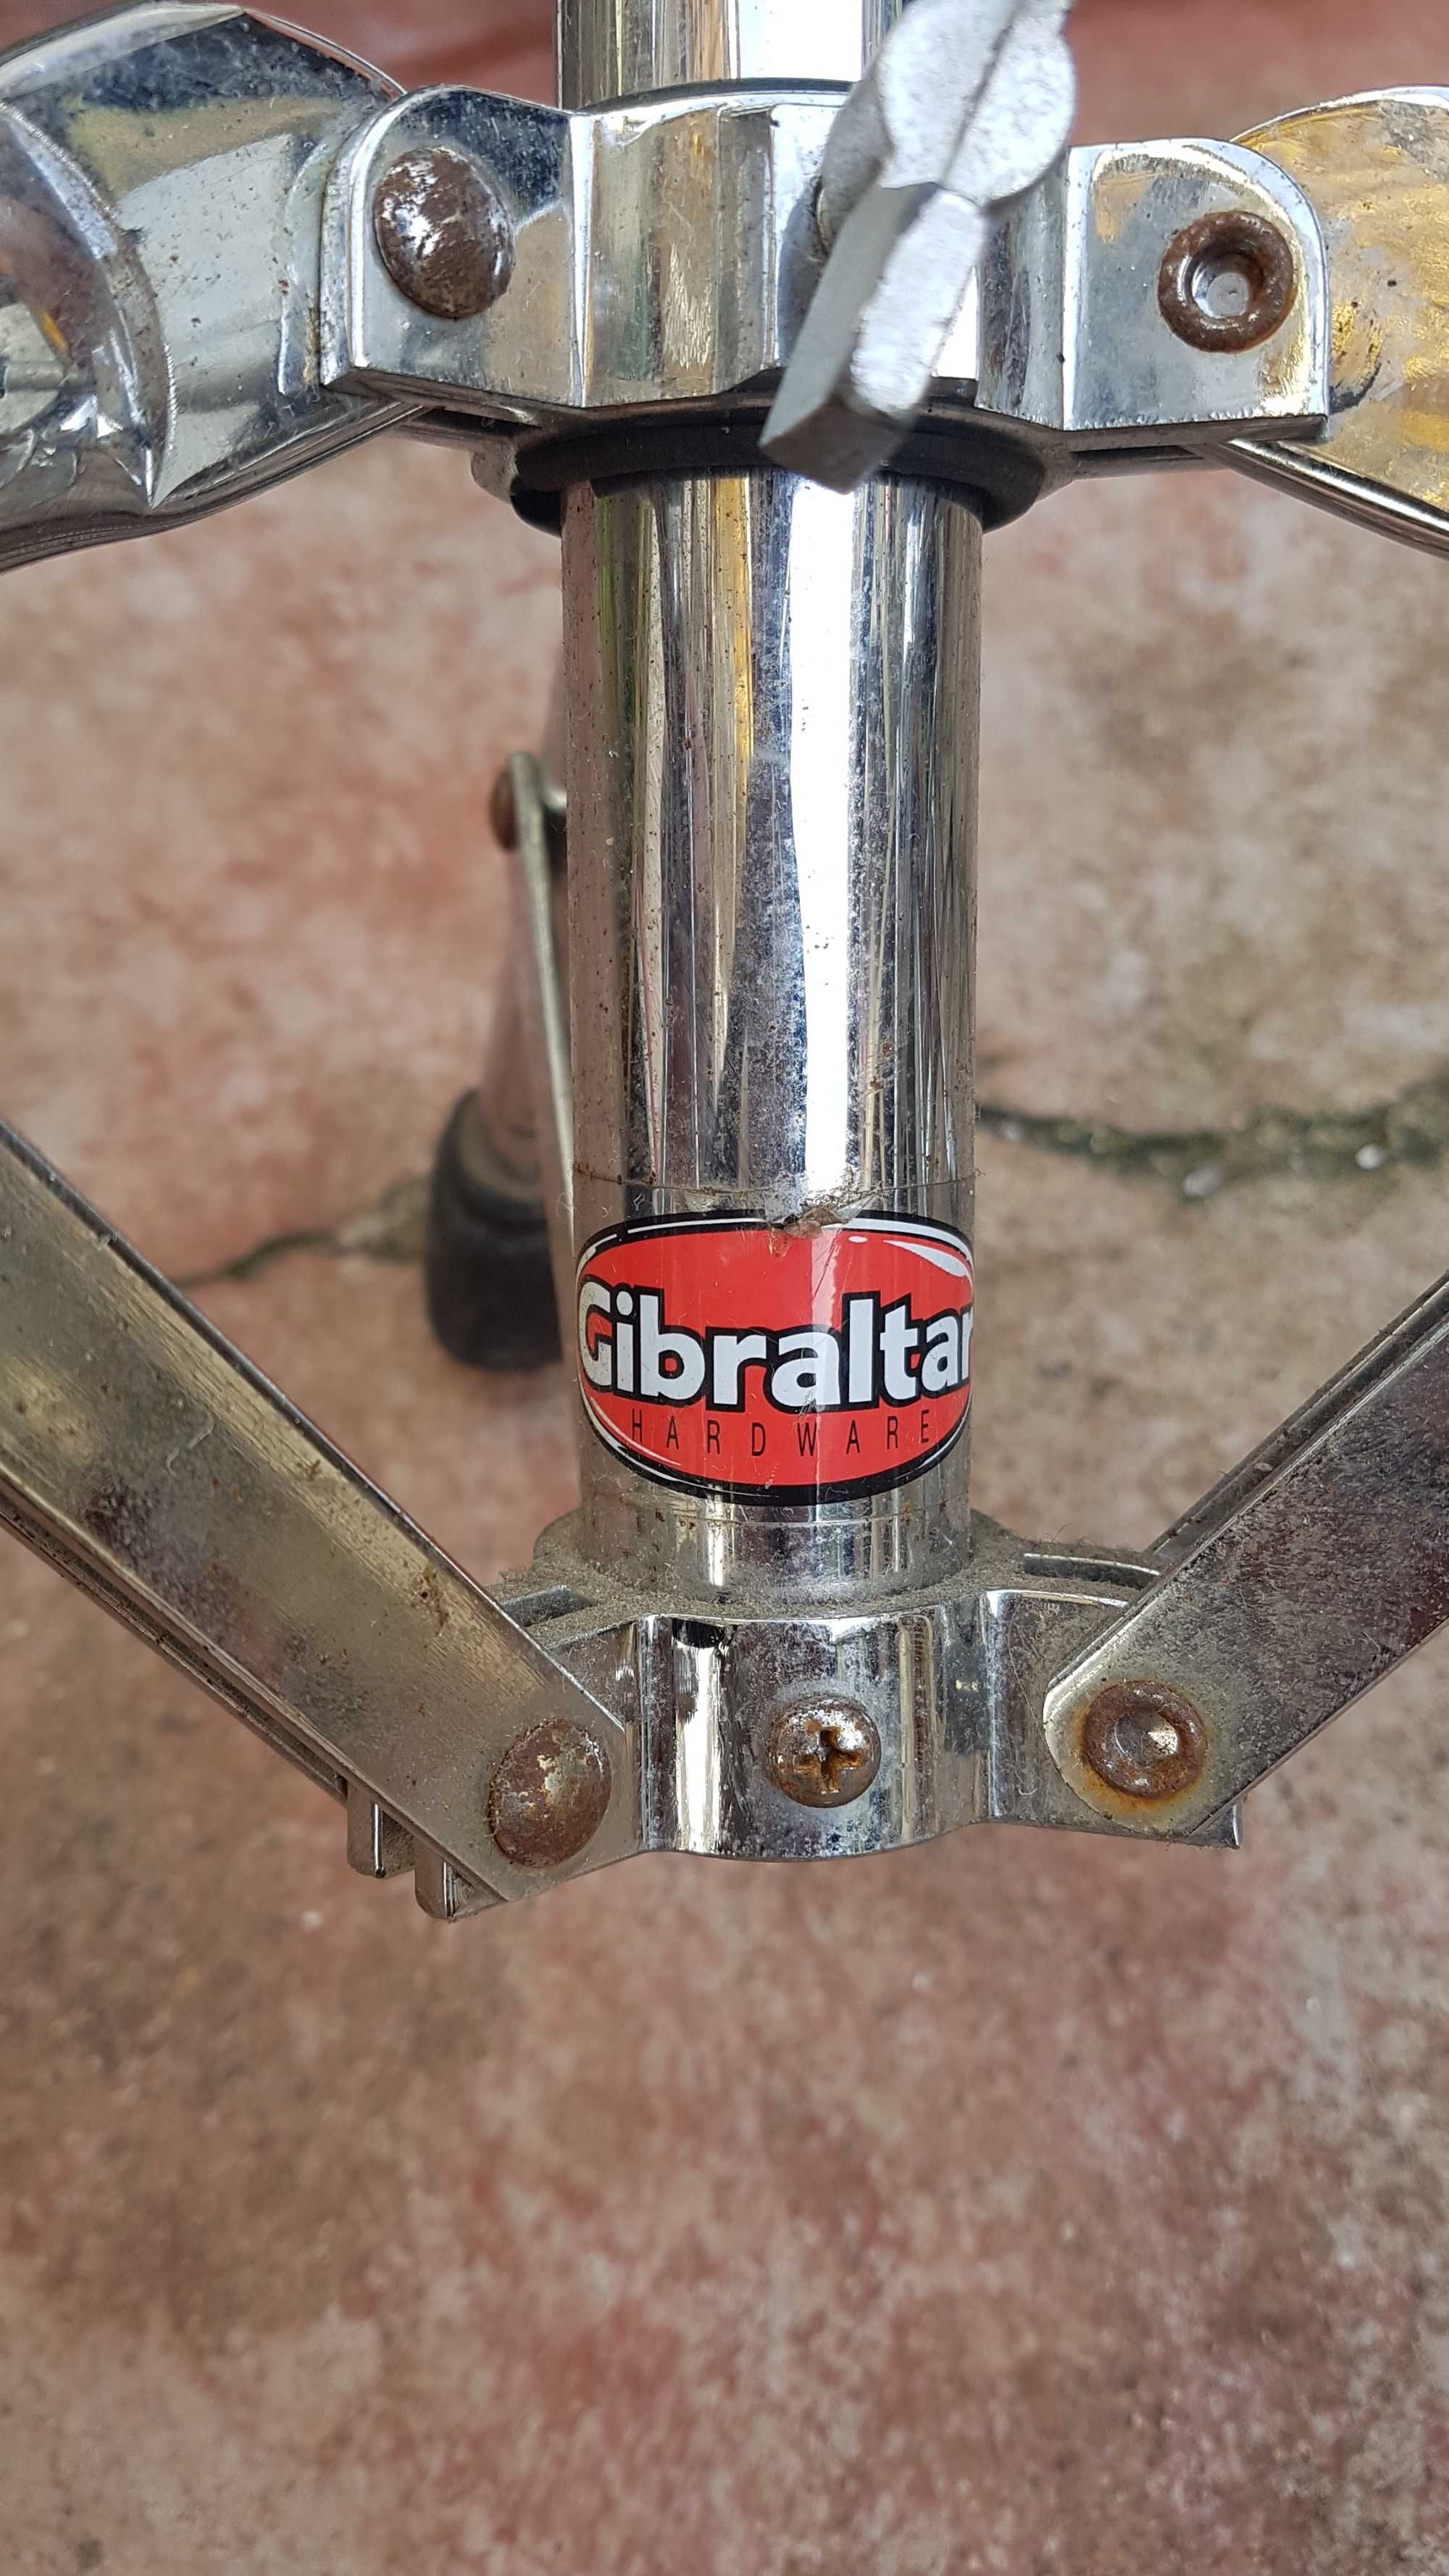 Gibraltar hardware